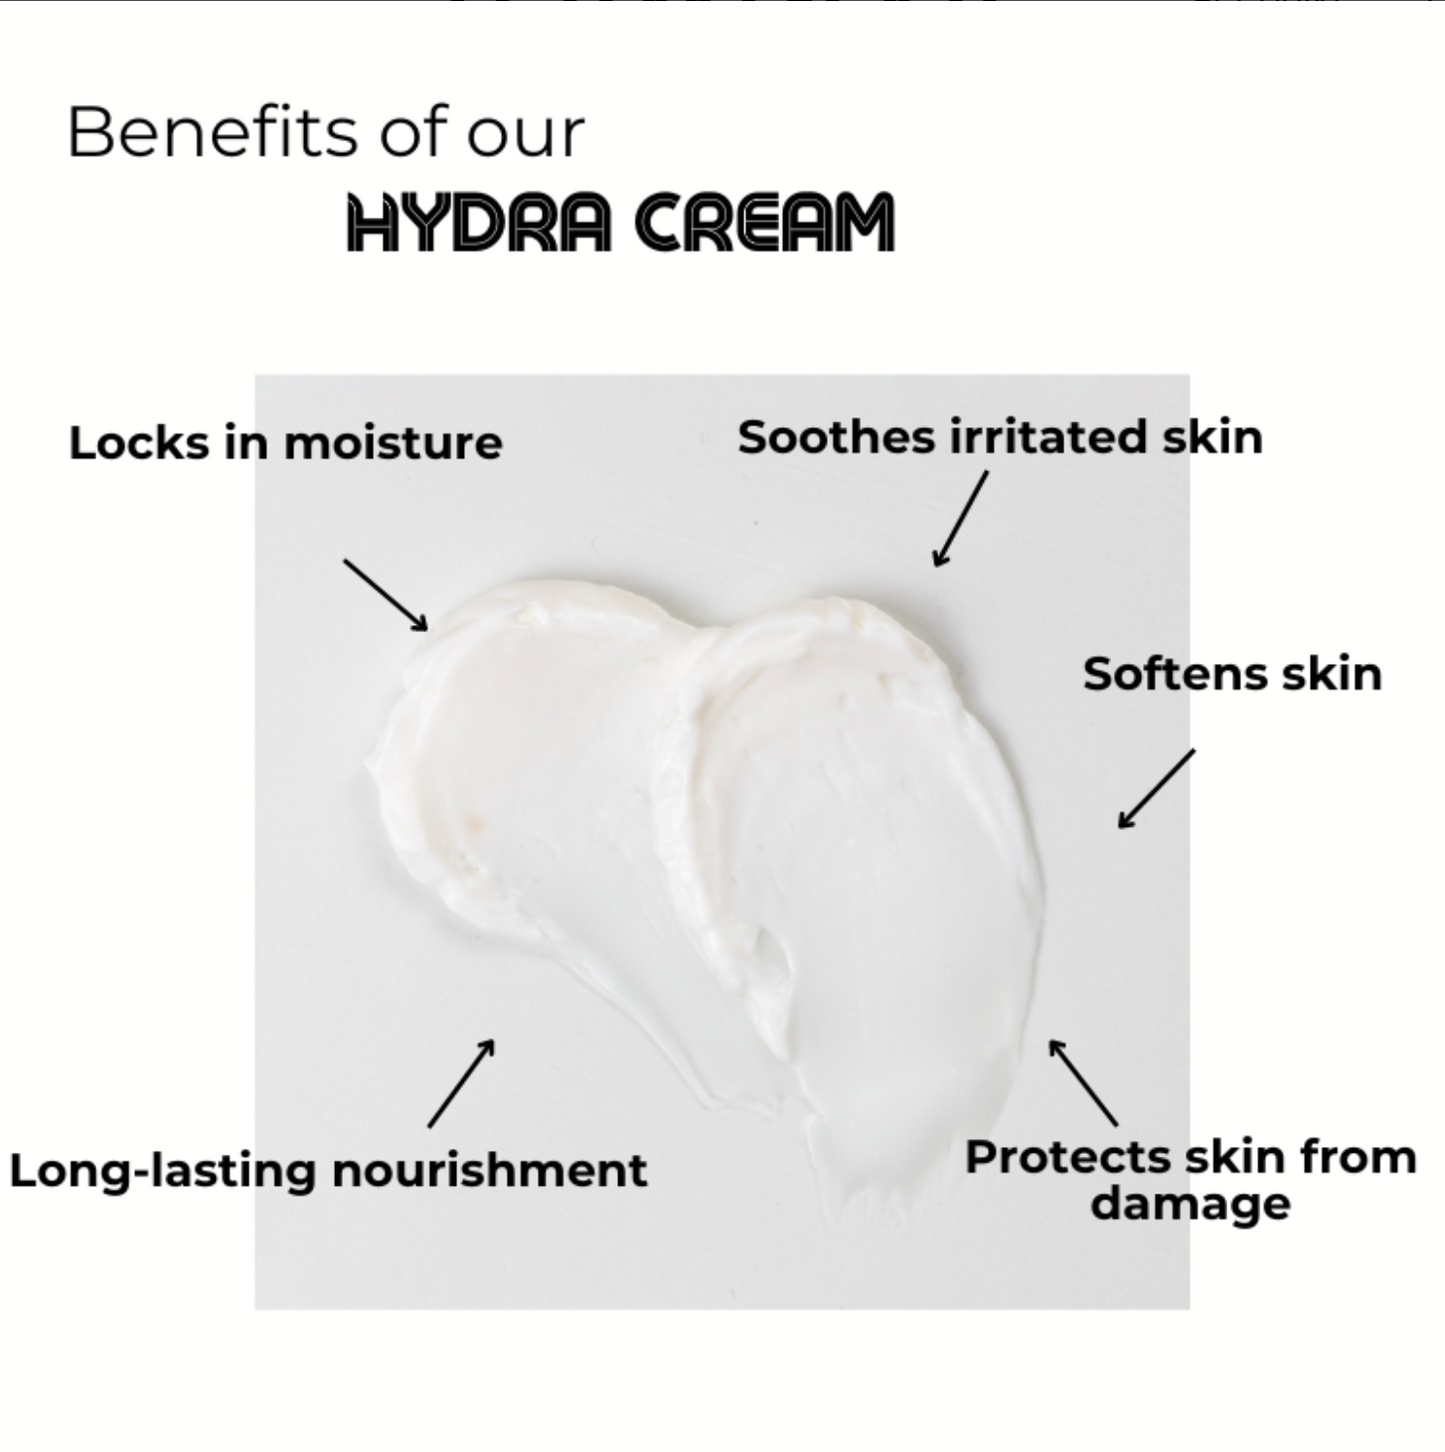 Piña Colada – Hydra Cream Intense Hydration Body Cream